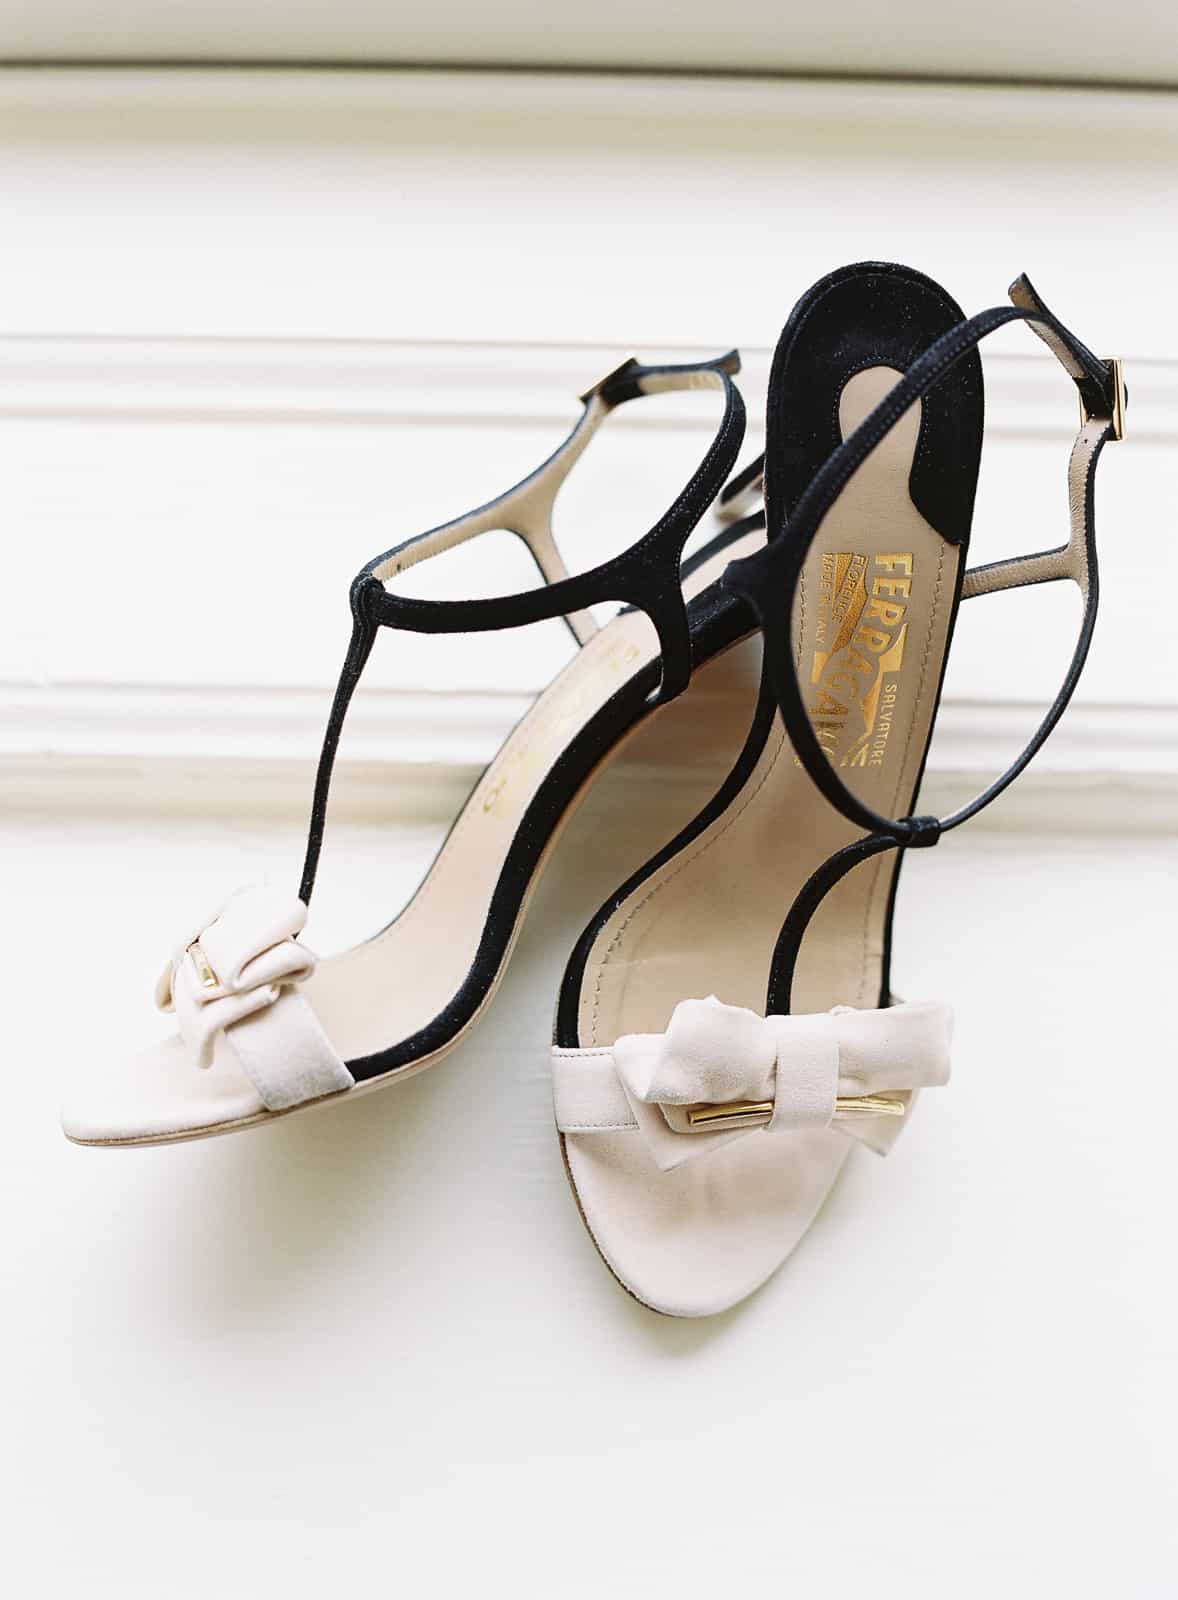 detail shot of white and black ferragamo shoes